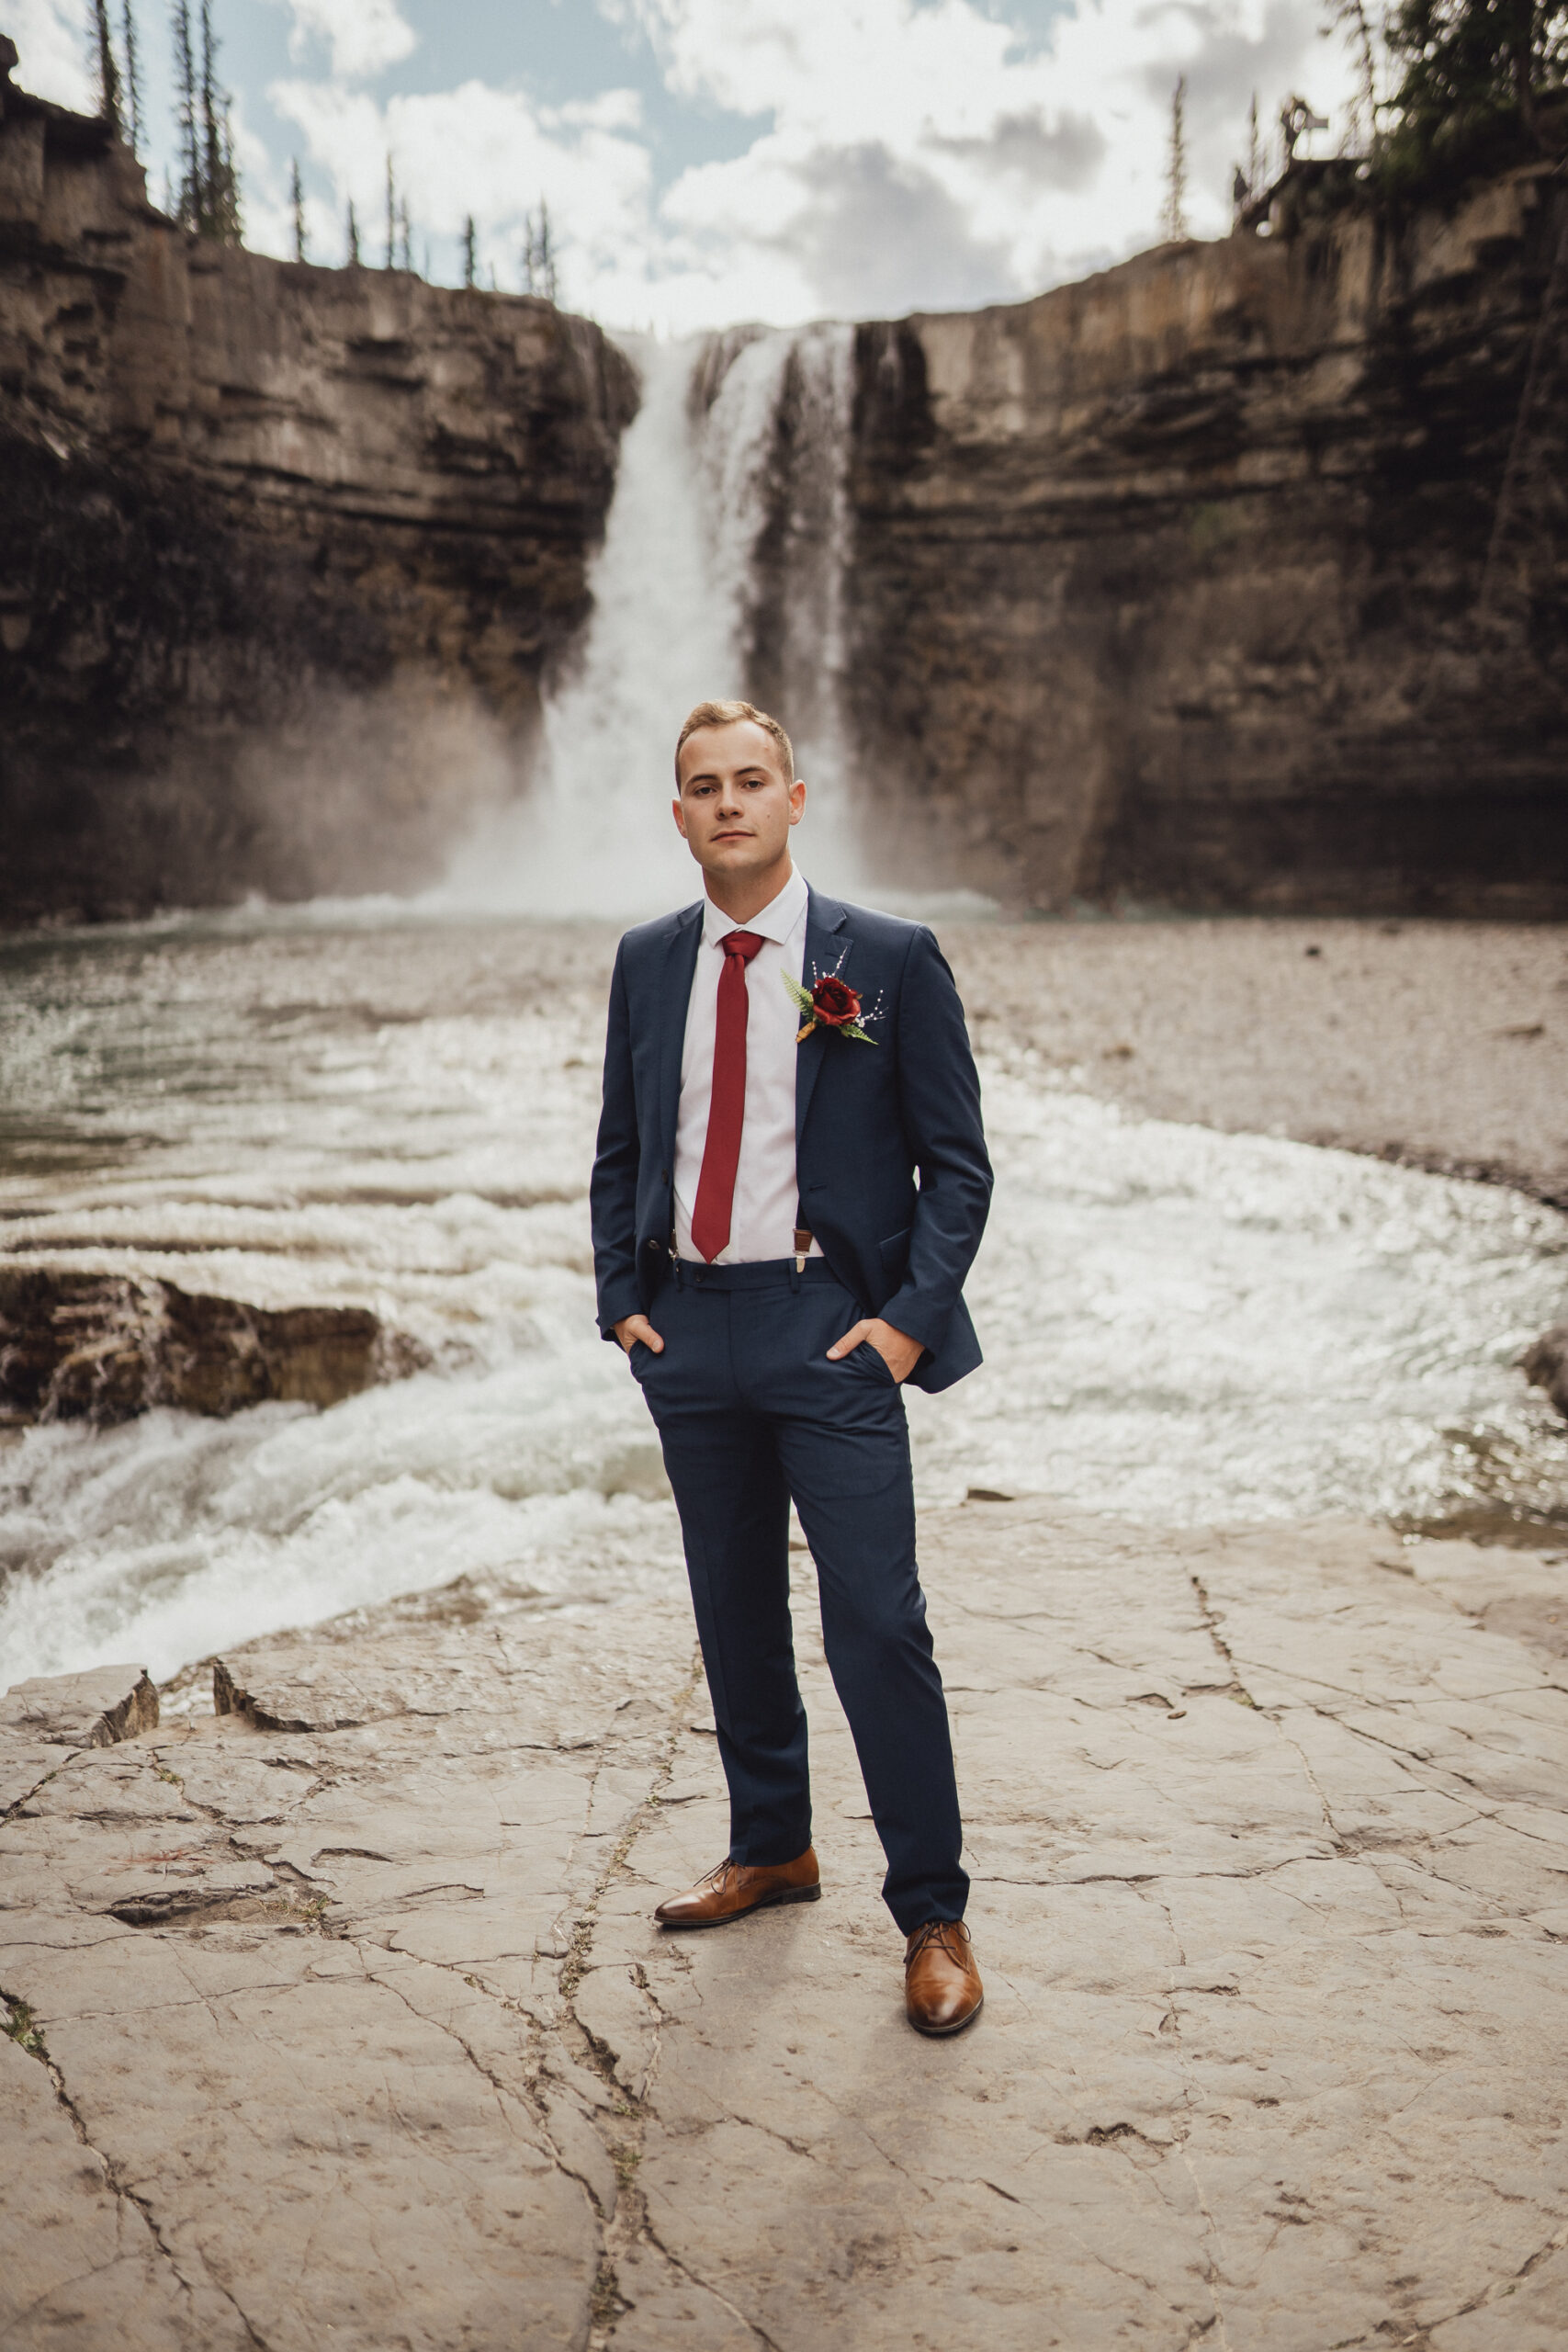 Groom in cobalt blue wedding suit and red tie standing in front of waterfall